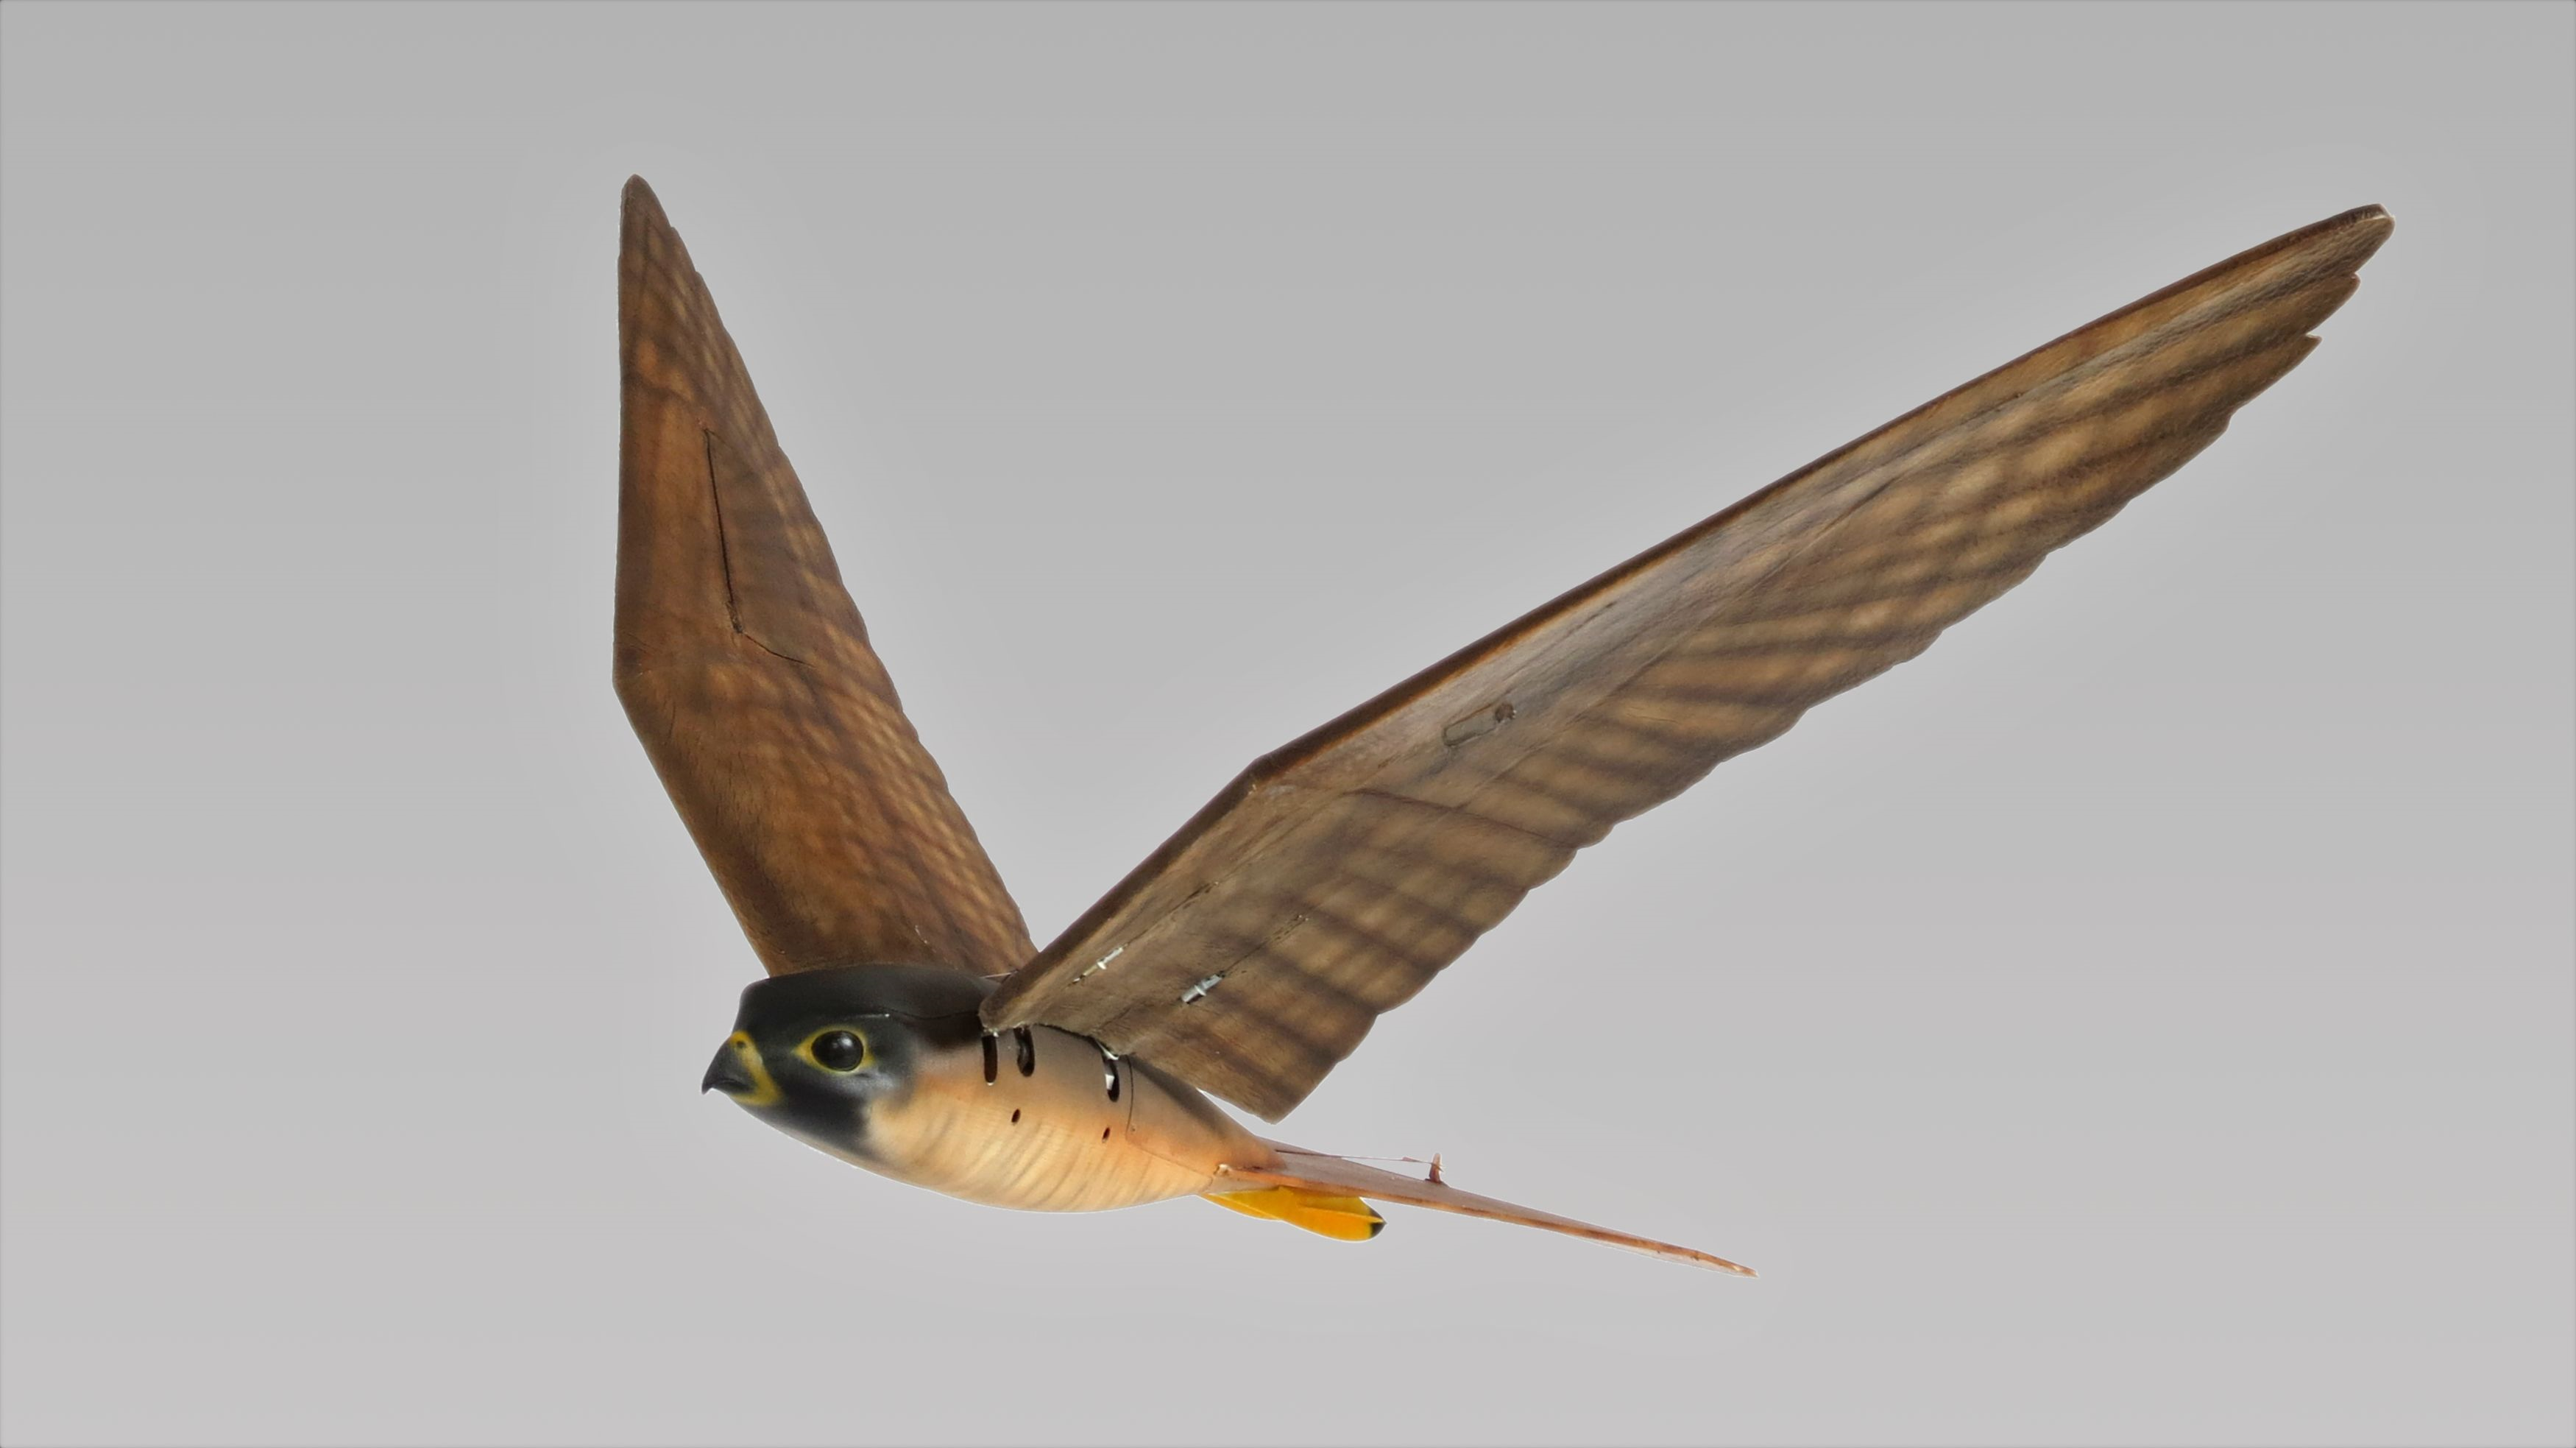 Realistic 3D Printed “Robirds” Designed to Scare Away Bird Flocks ...